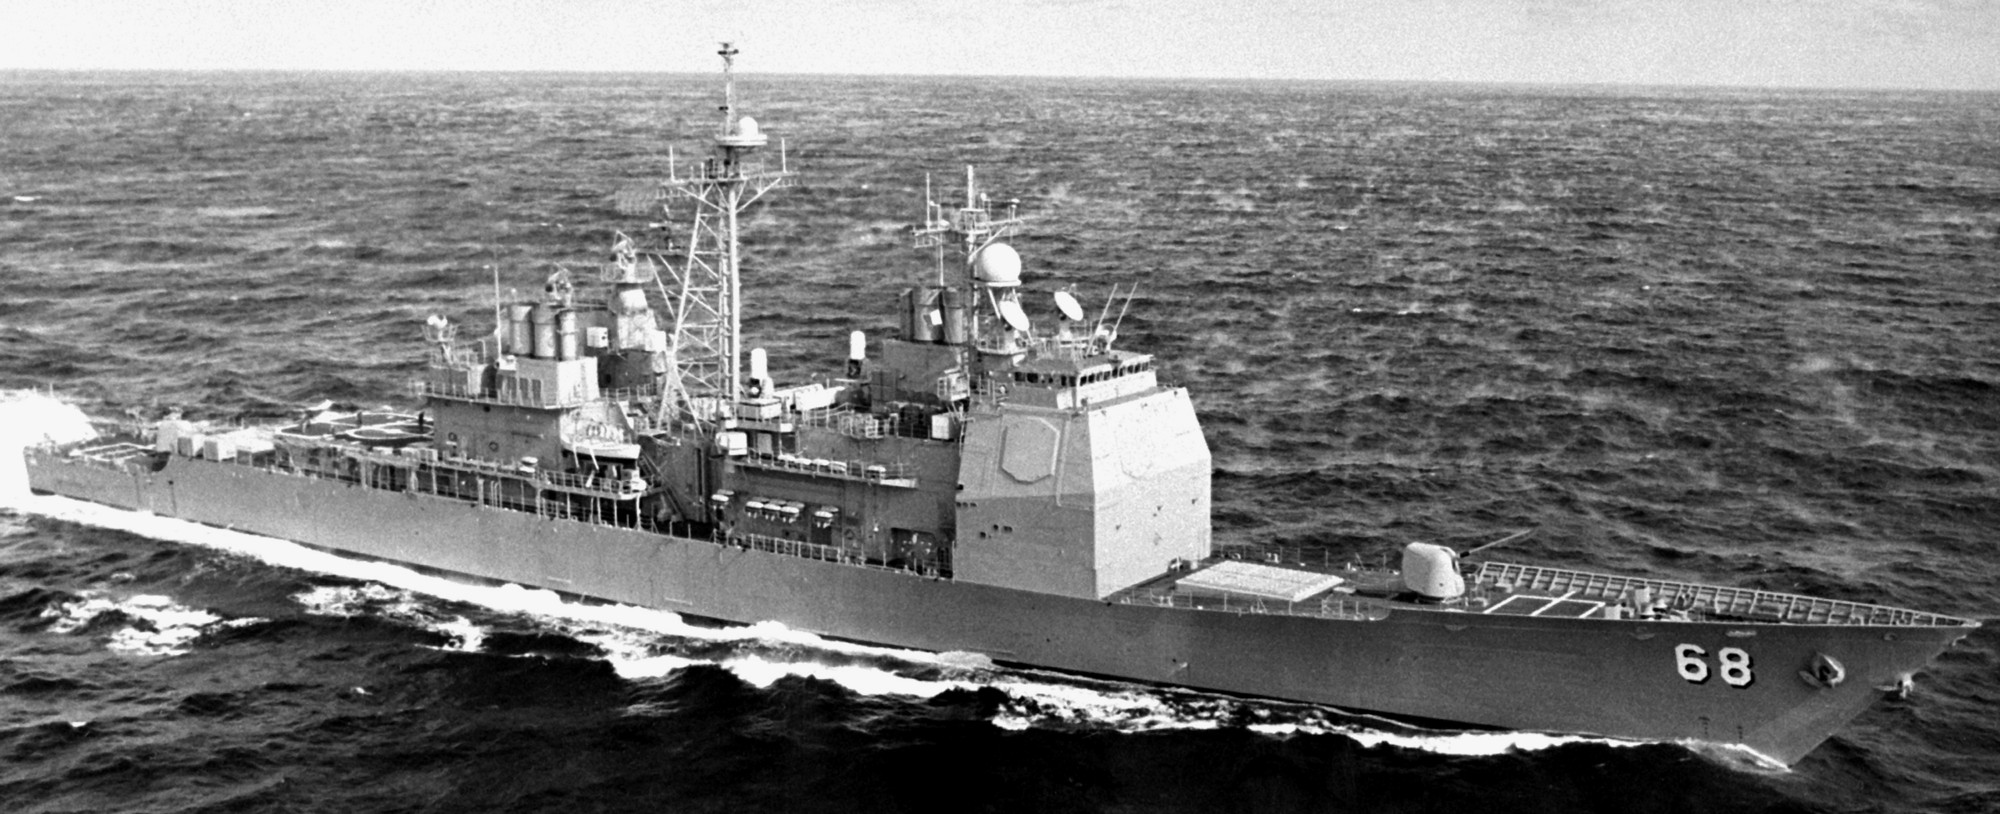 cg-68 uss anzio ticonderoga class guided missile cruiser aegis us navy acceptance trials 62